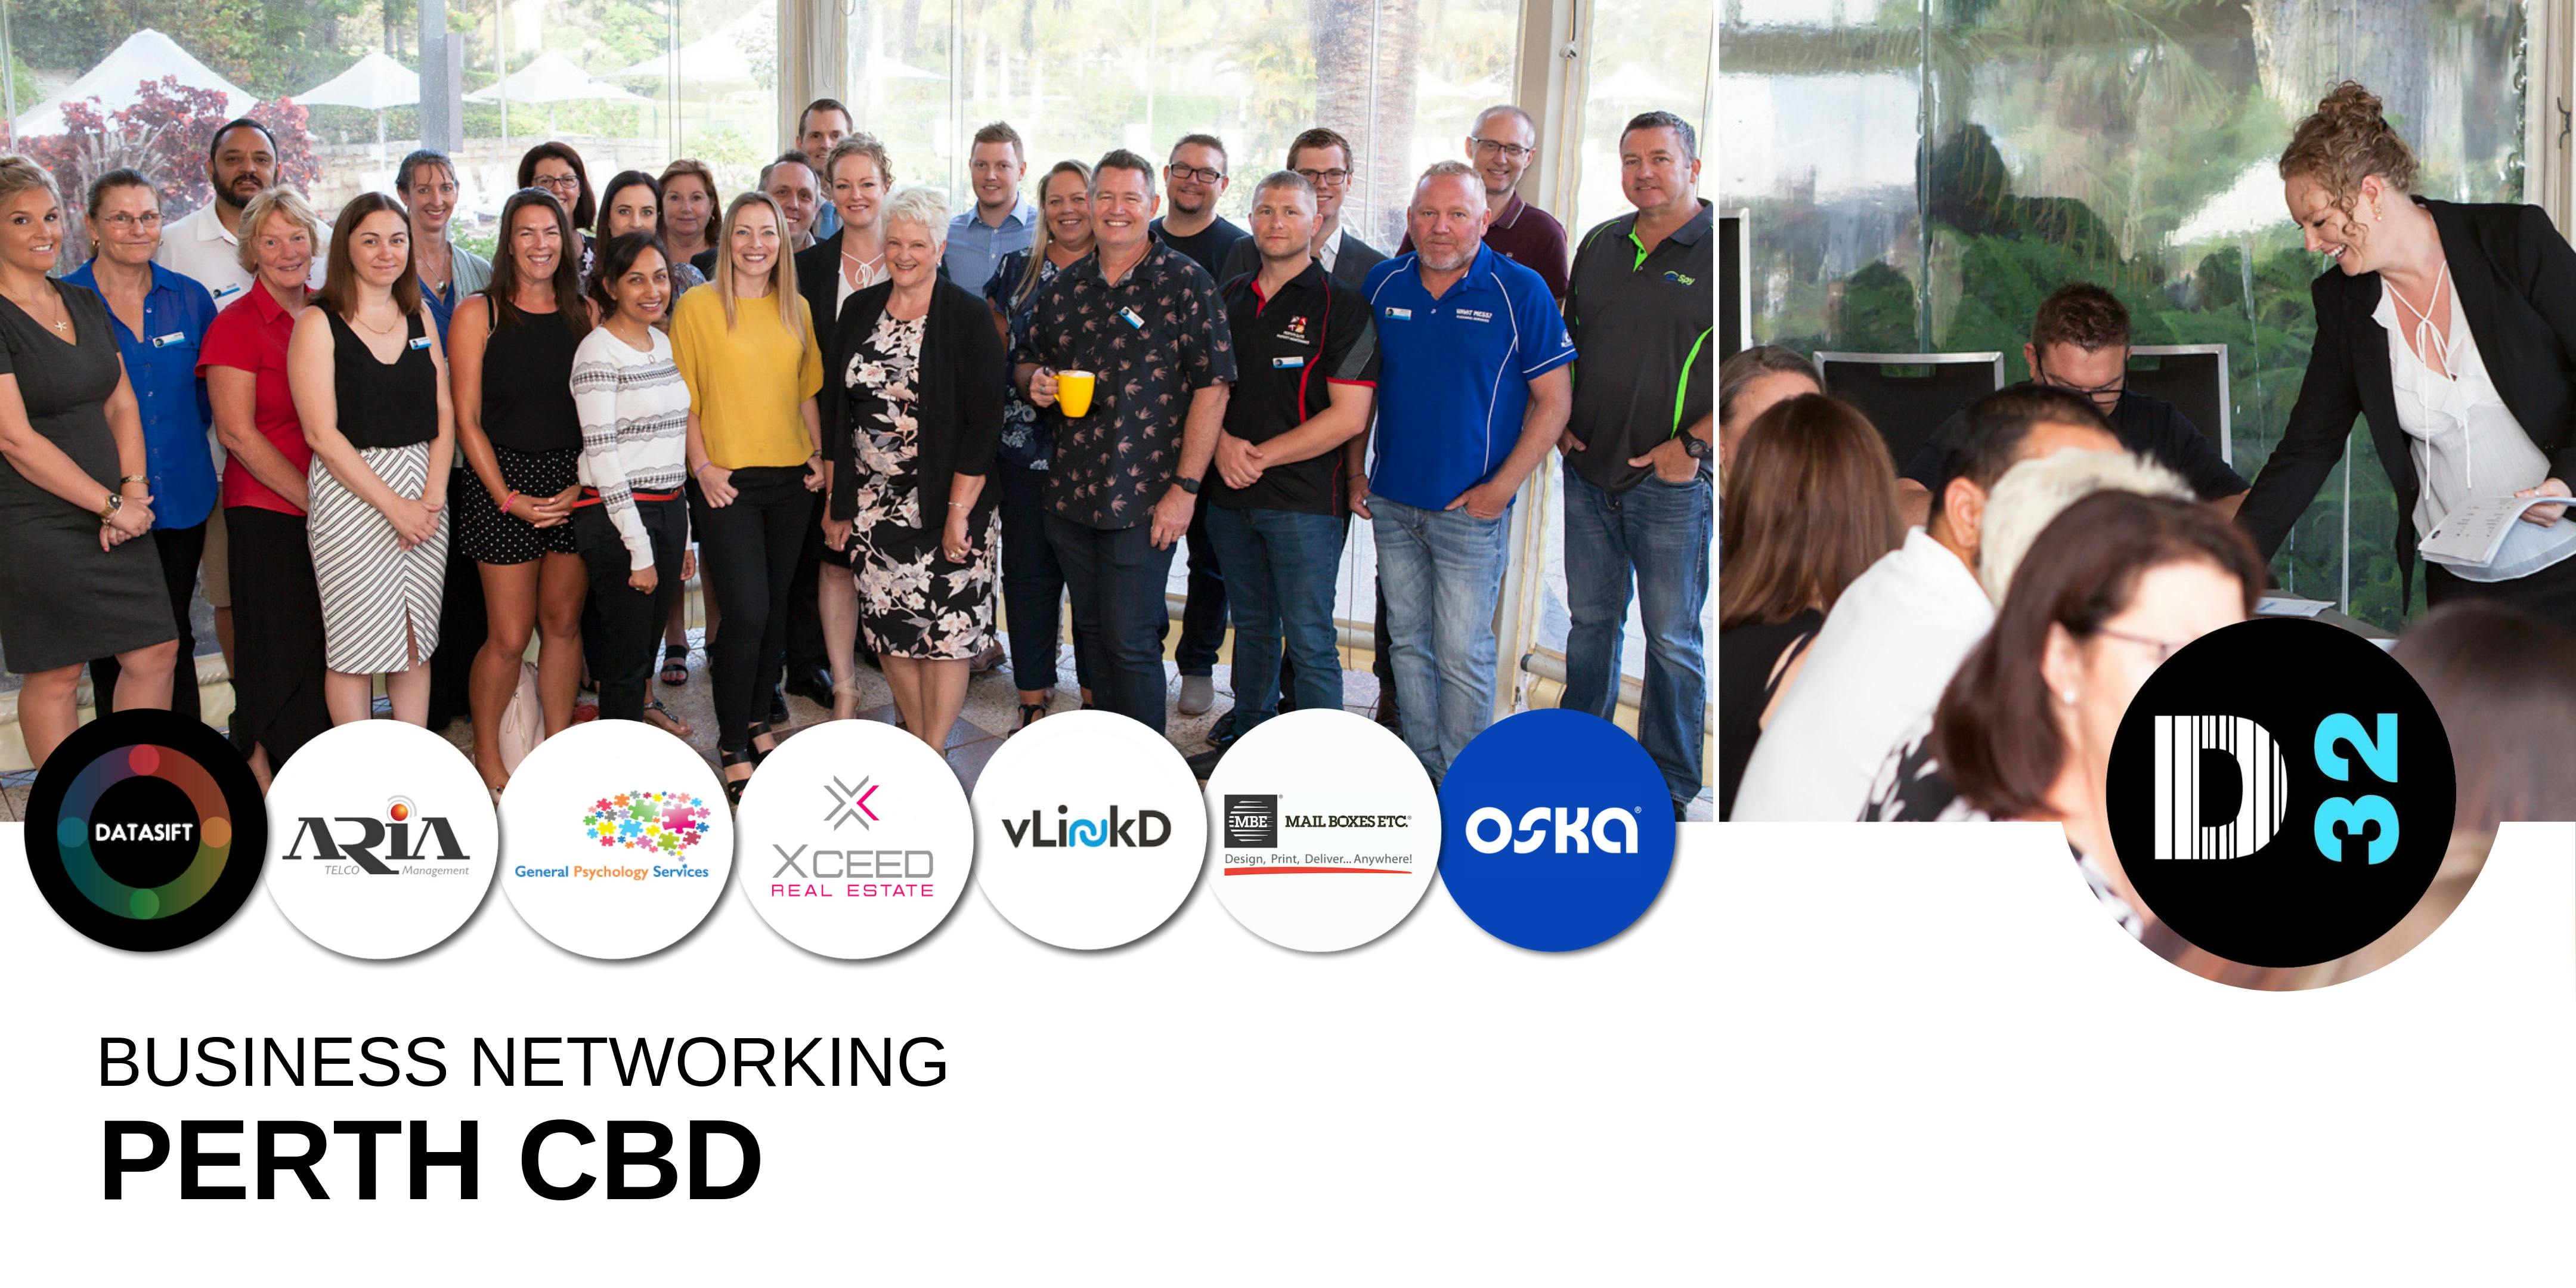 District32 Business Networking Perth – Perth CBD - Thu 20th June